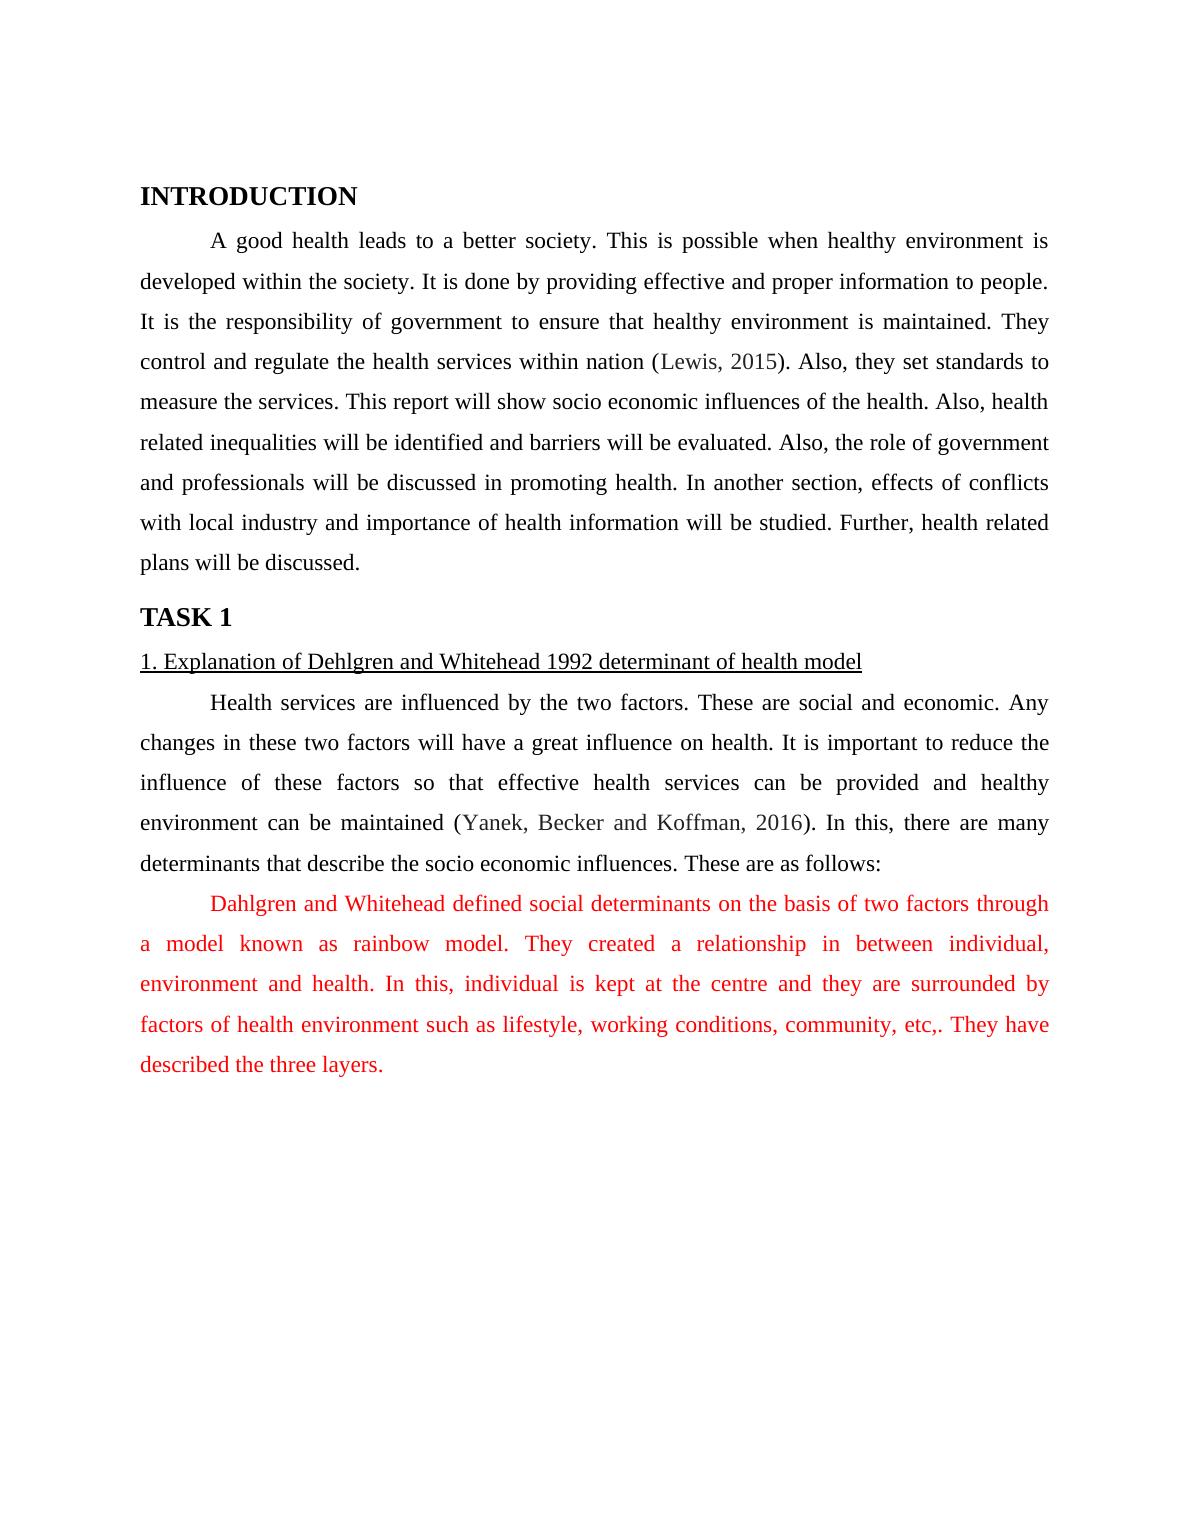 Socio Economic Influences of the Health - PDF_3